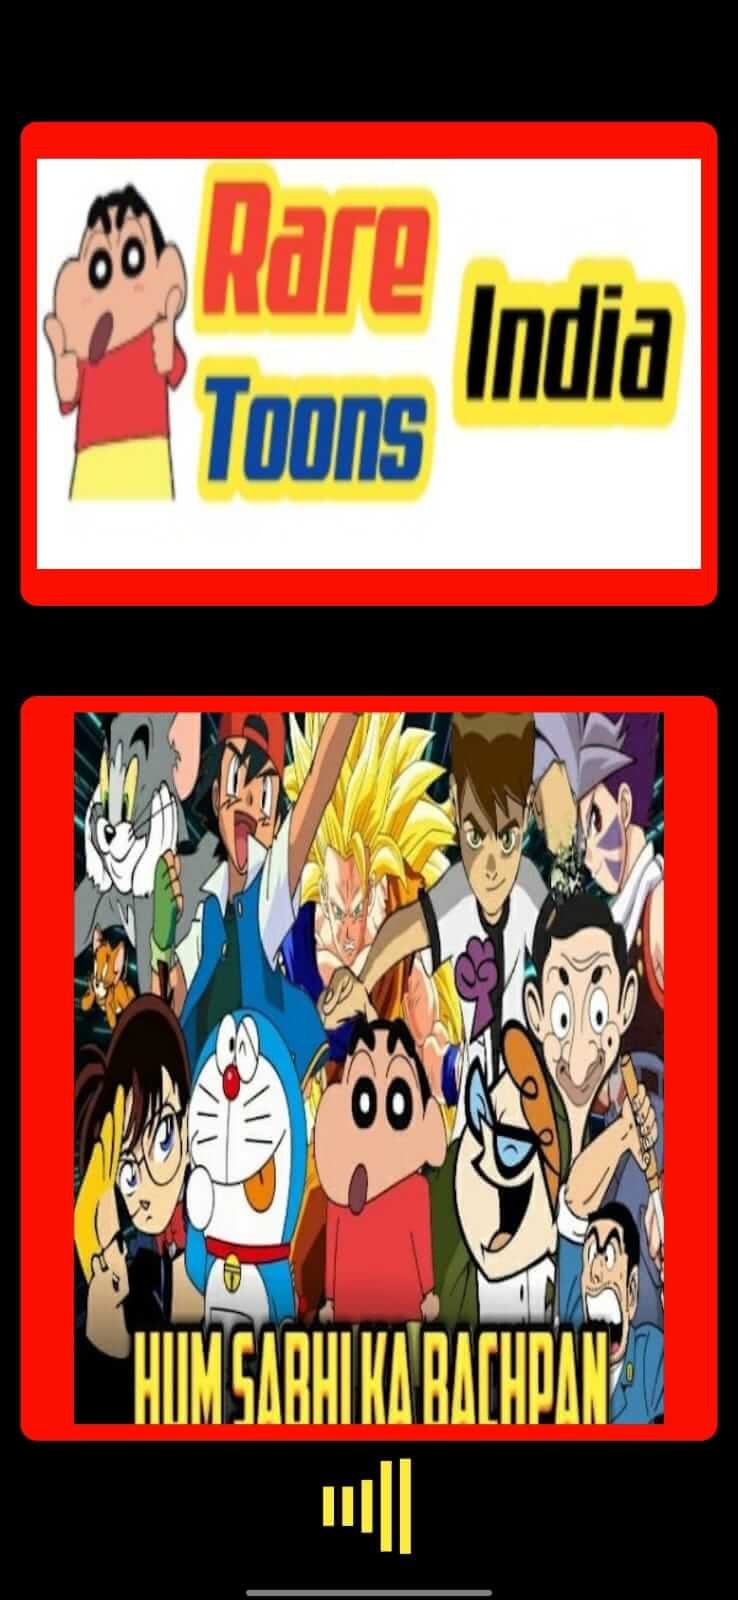 Deadtoonsnet Dead Toons India  Anime and Cartoon Videos in Hin